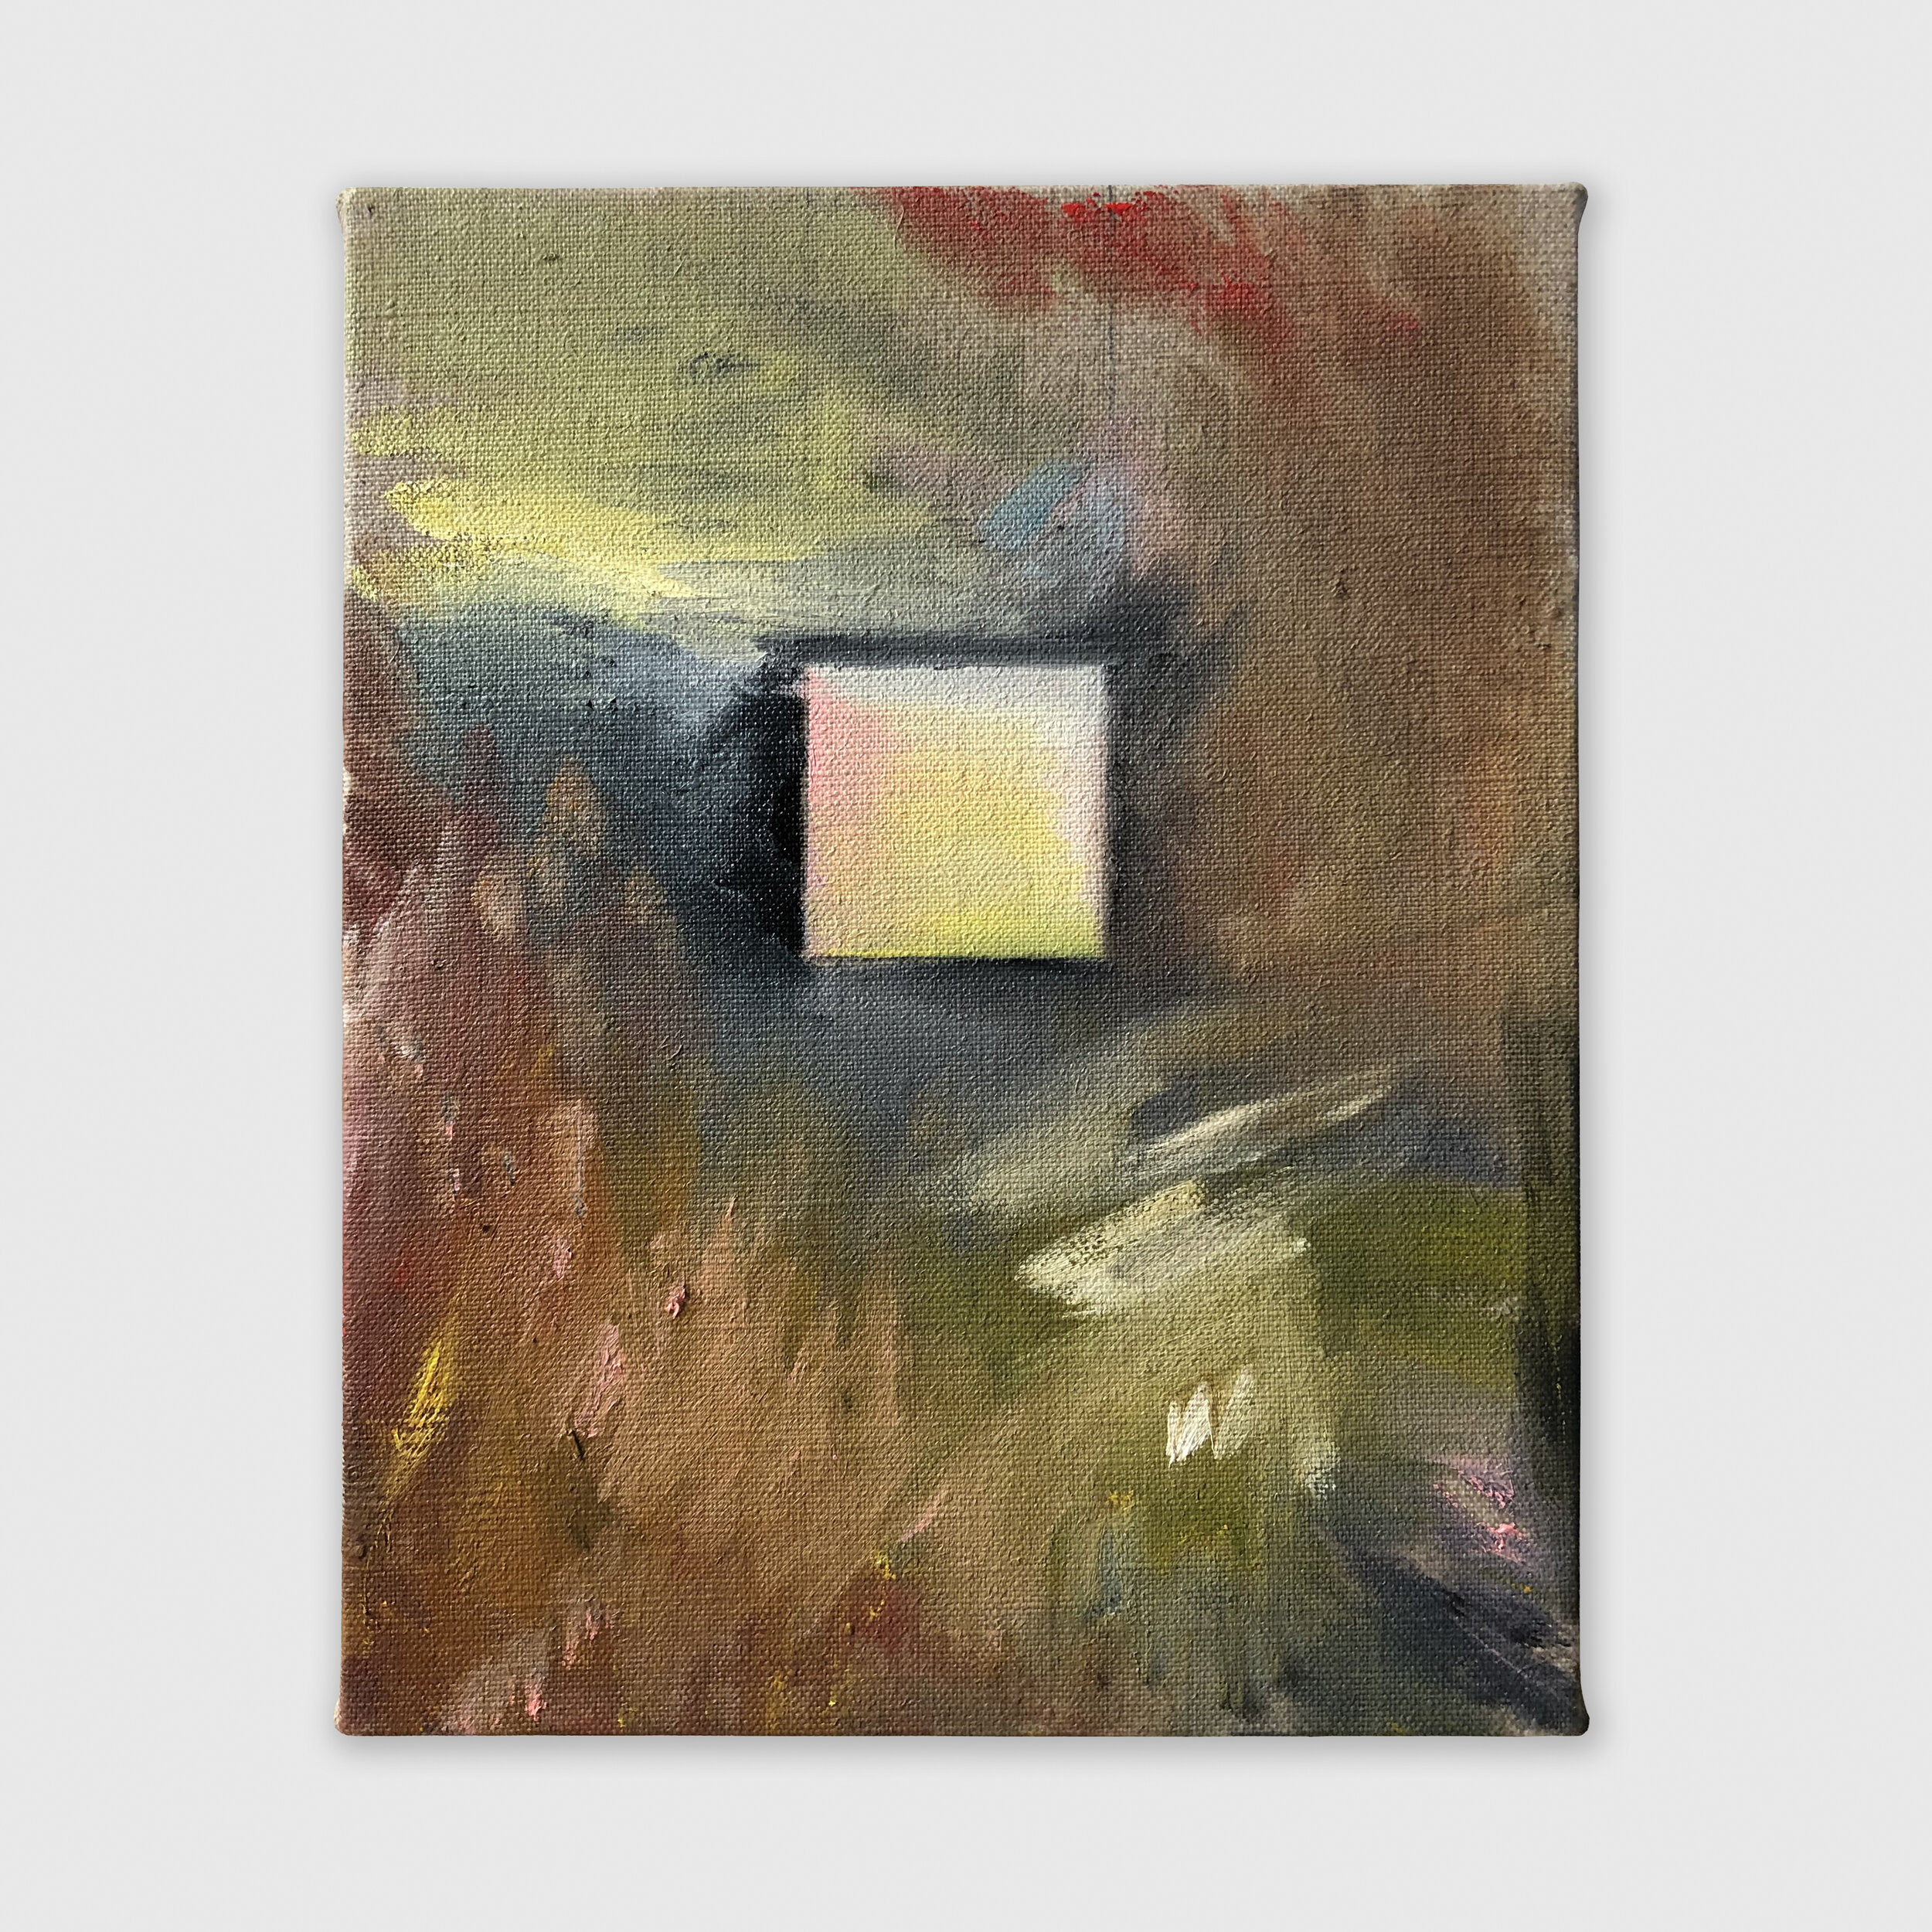 Untitled (Window 57), 2020 